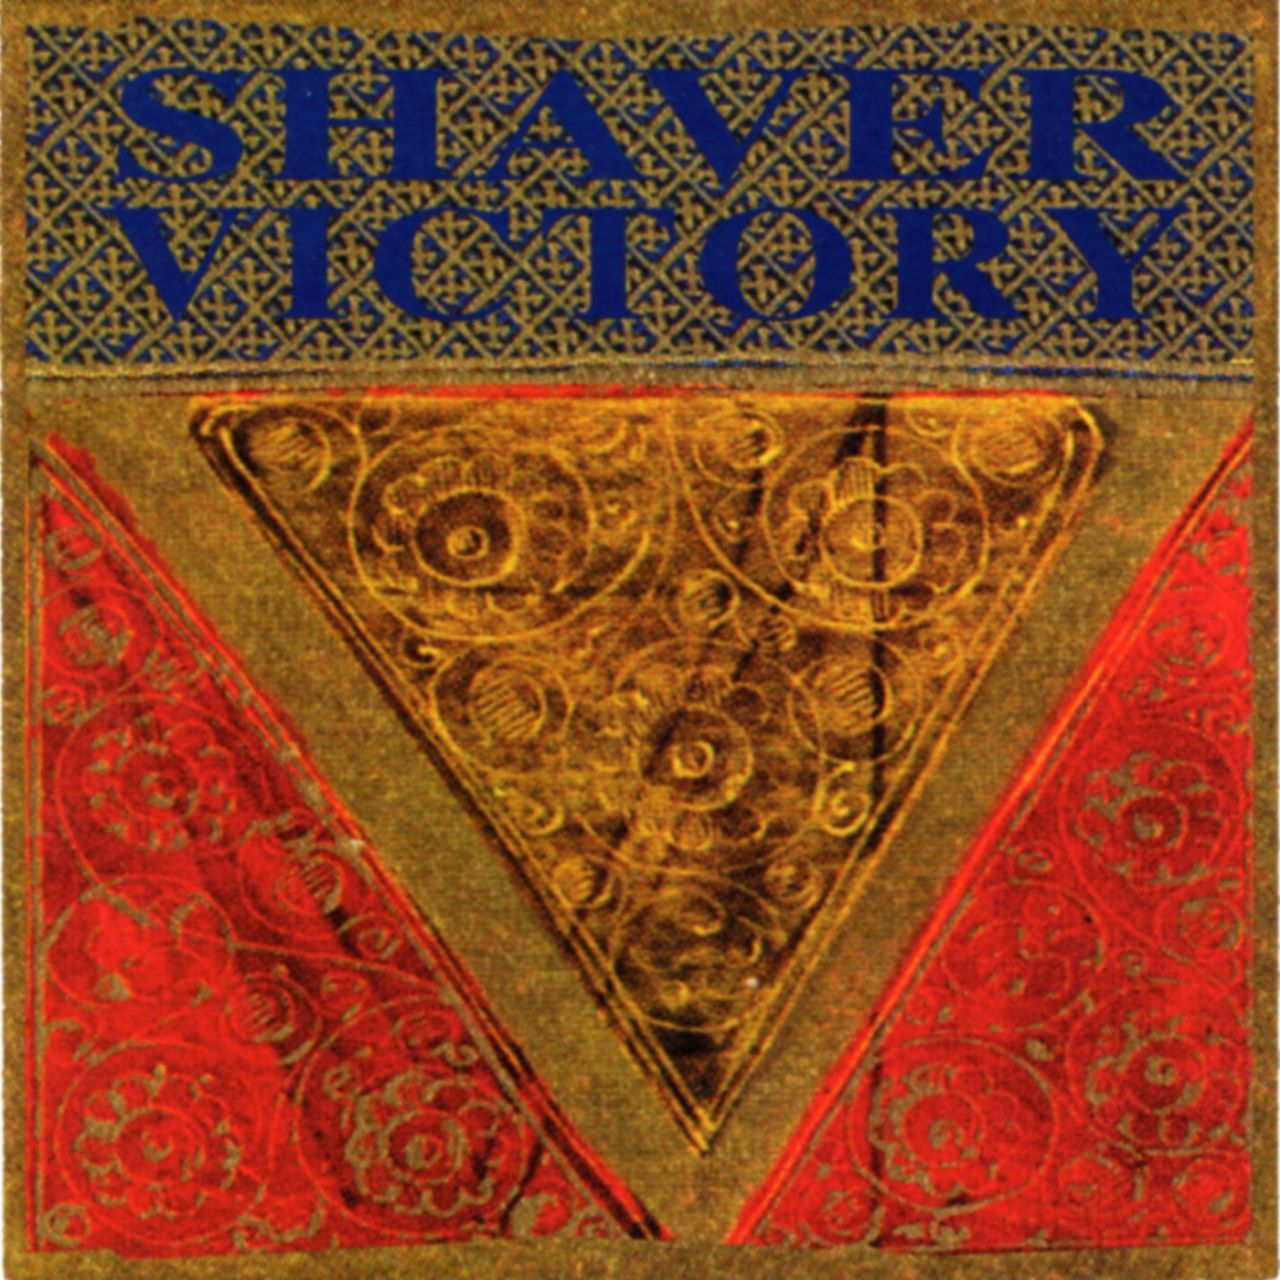 Shaver - Victory cover album